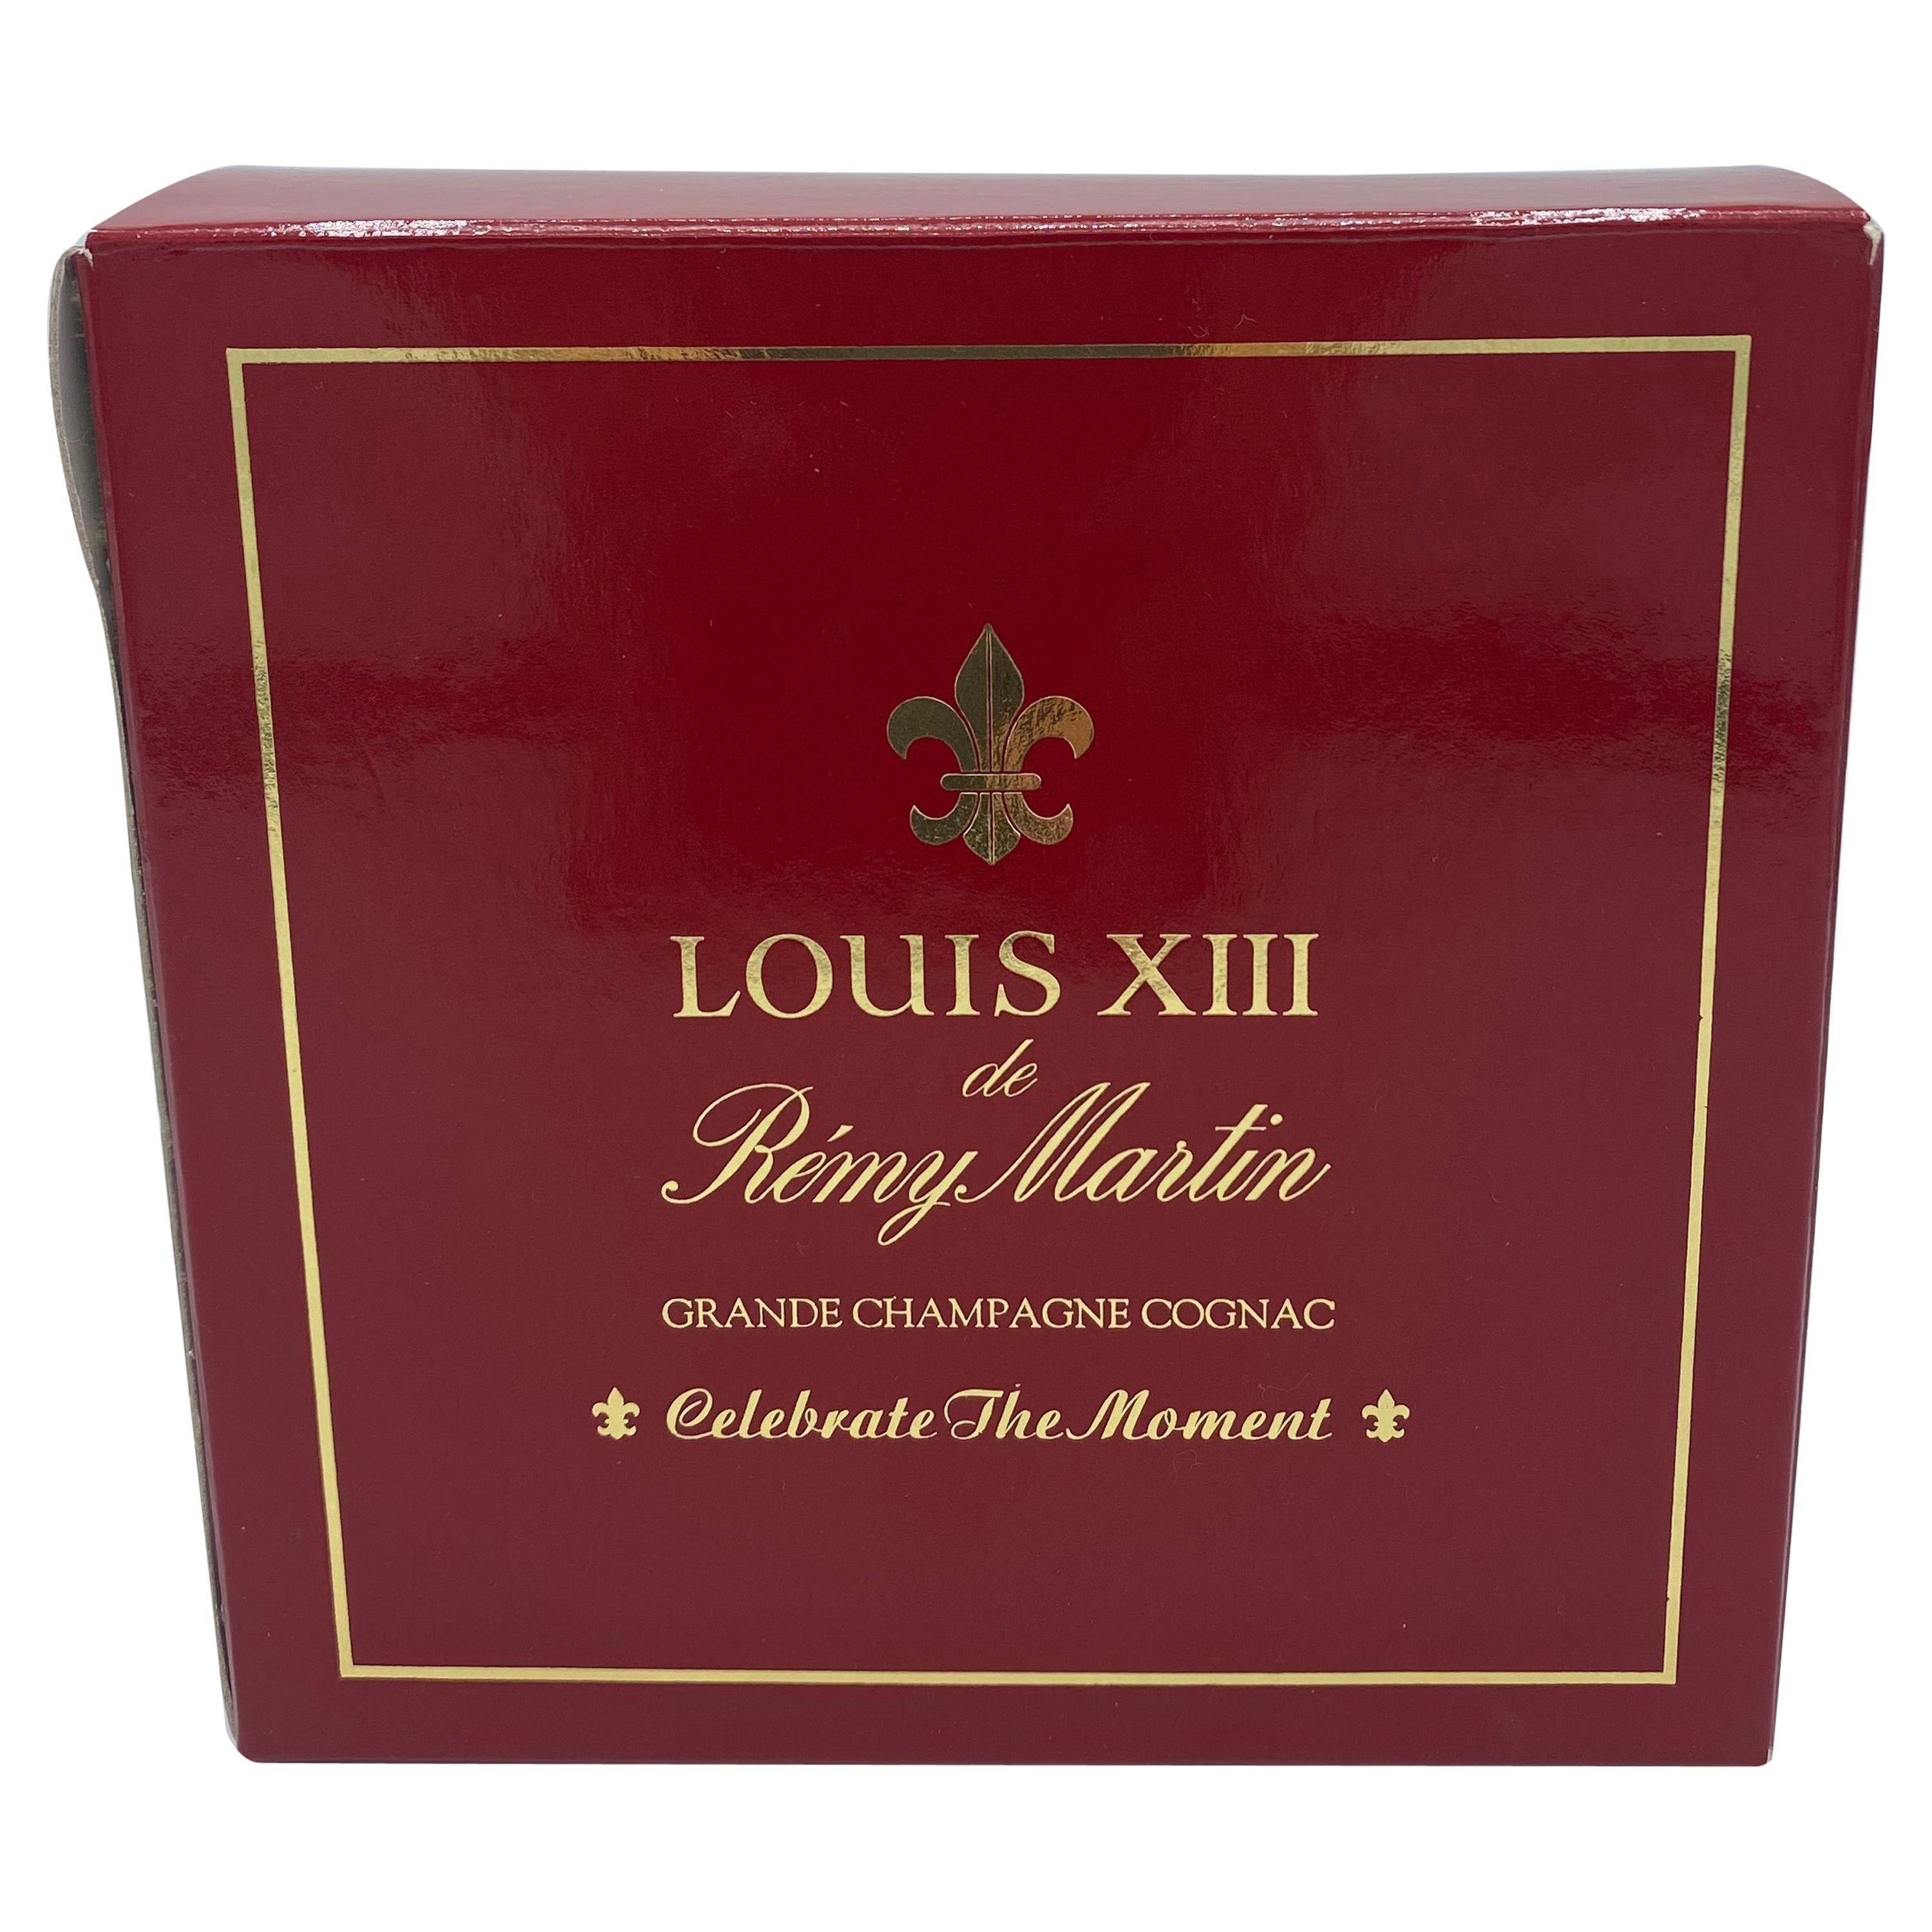 Vintage Baccarat Crystal Louis XIII Remy Martin Cognac Liquor Decanter Set:: 50ml